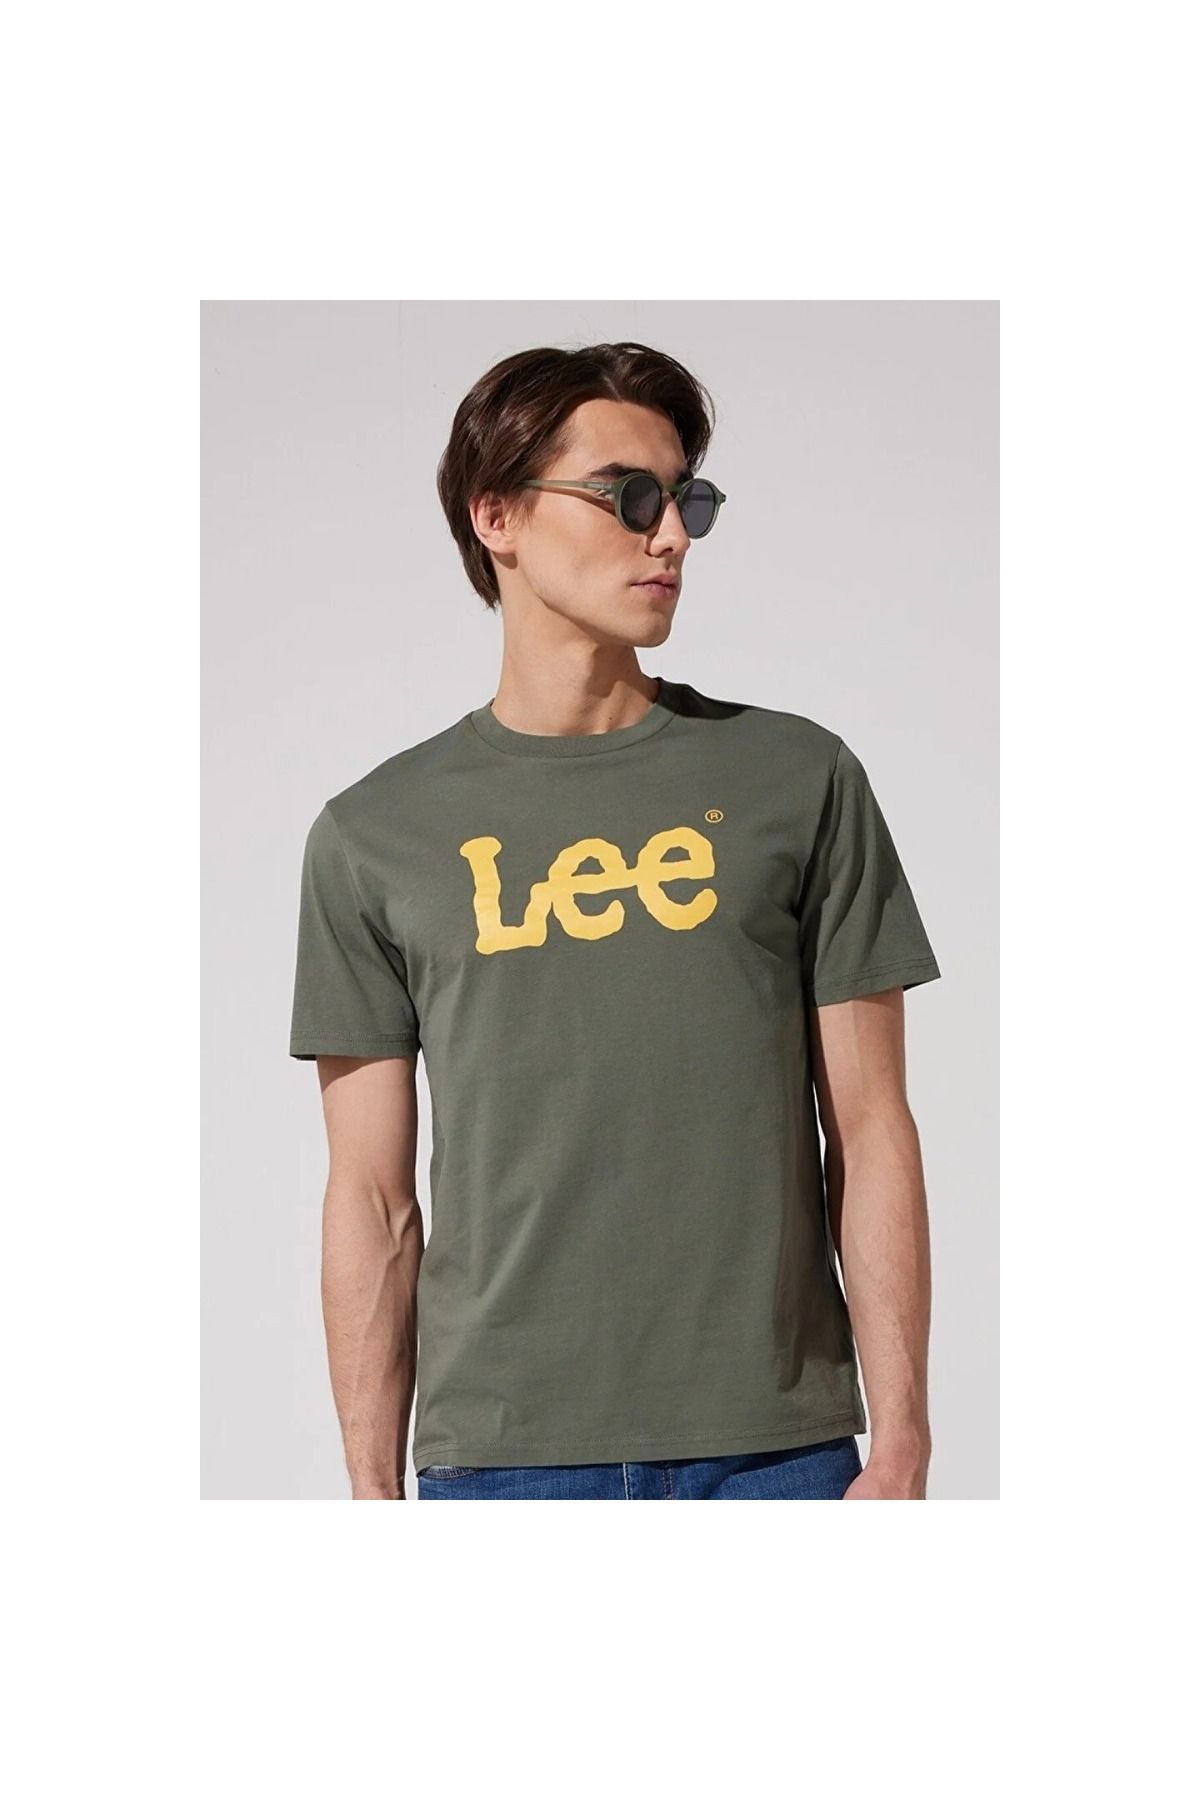 Lee مجموعه اتحادیه اروپا Big Logo Men's Khaki Bike T shirt